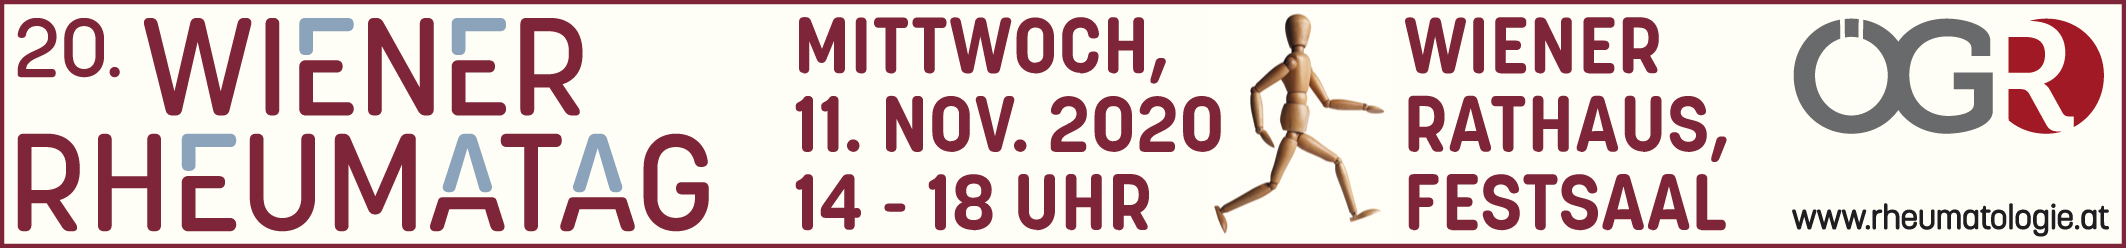 20. Wiener Rheumatag 2020